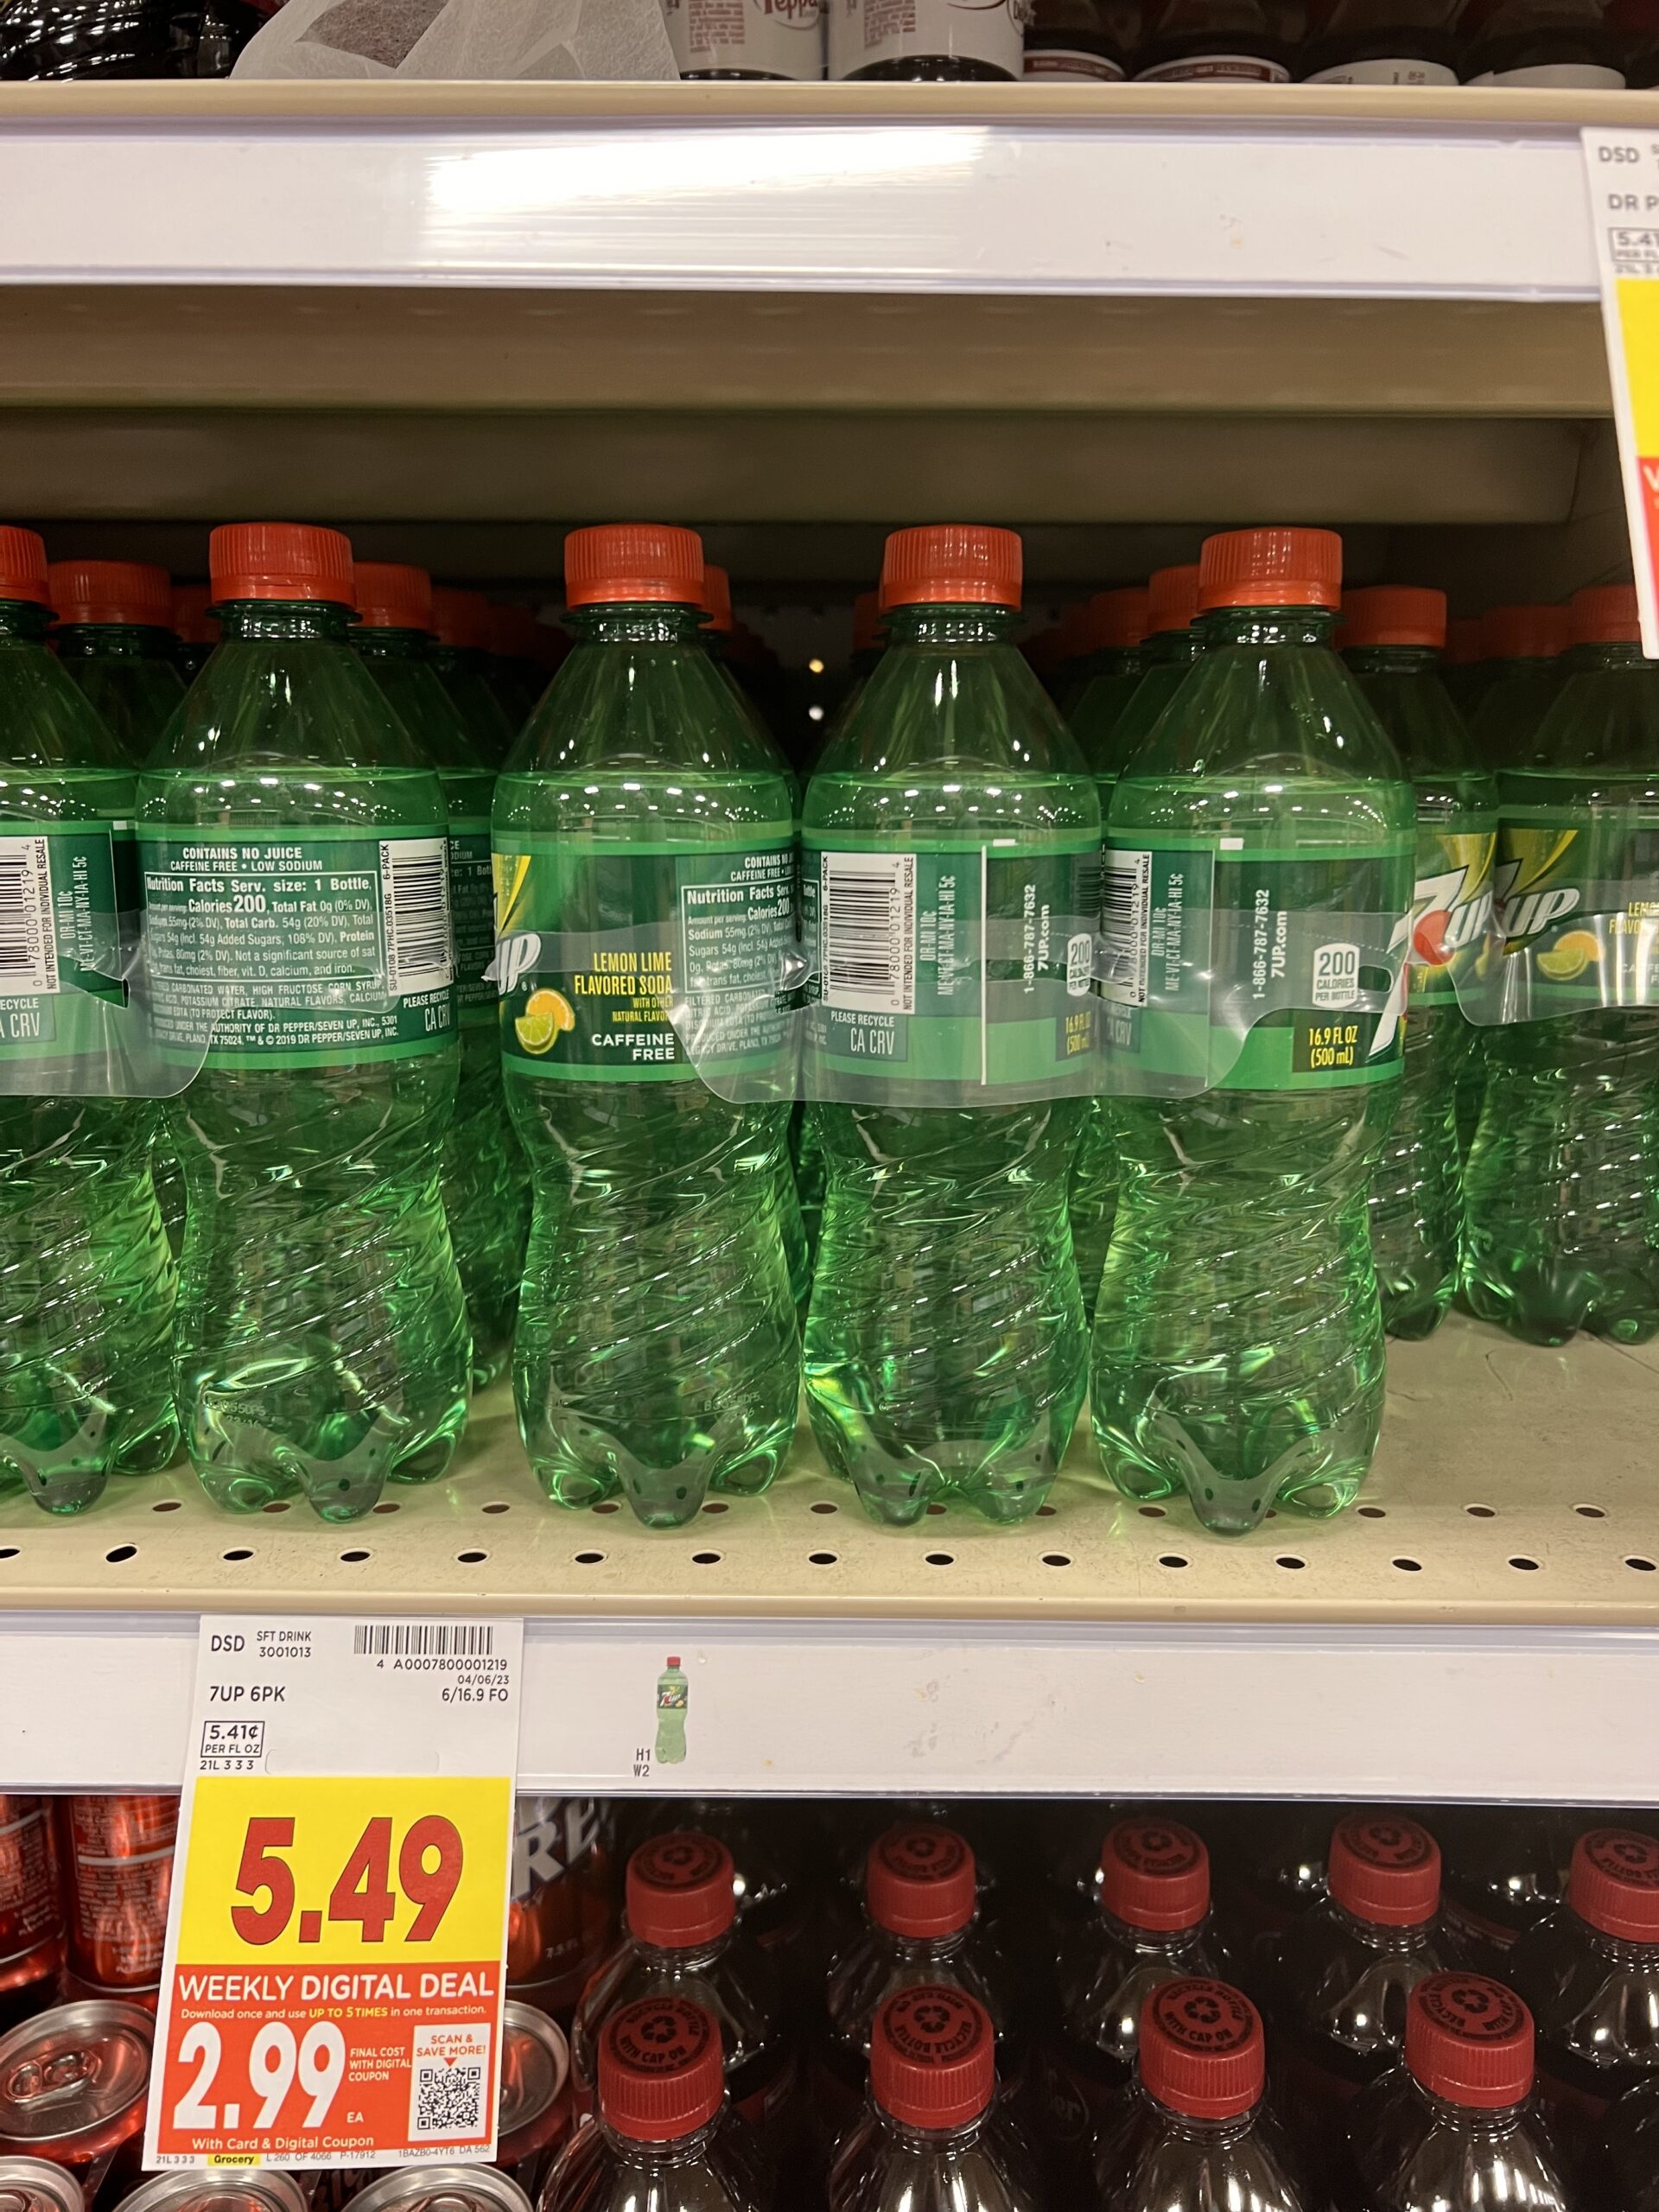 Coca-Cola, Pepsi or 7UP kroger shelf image 1